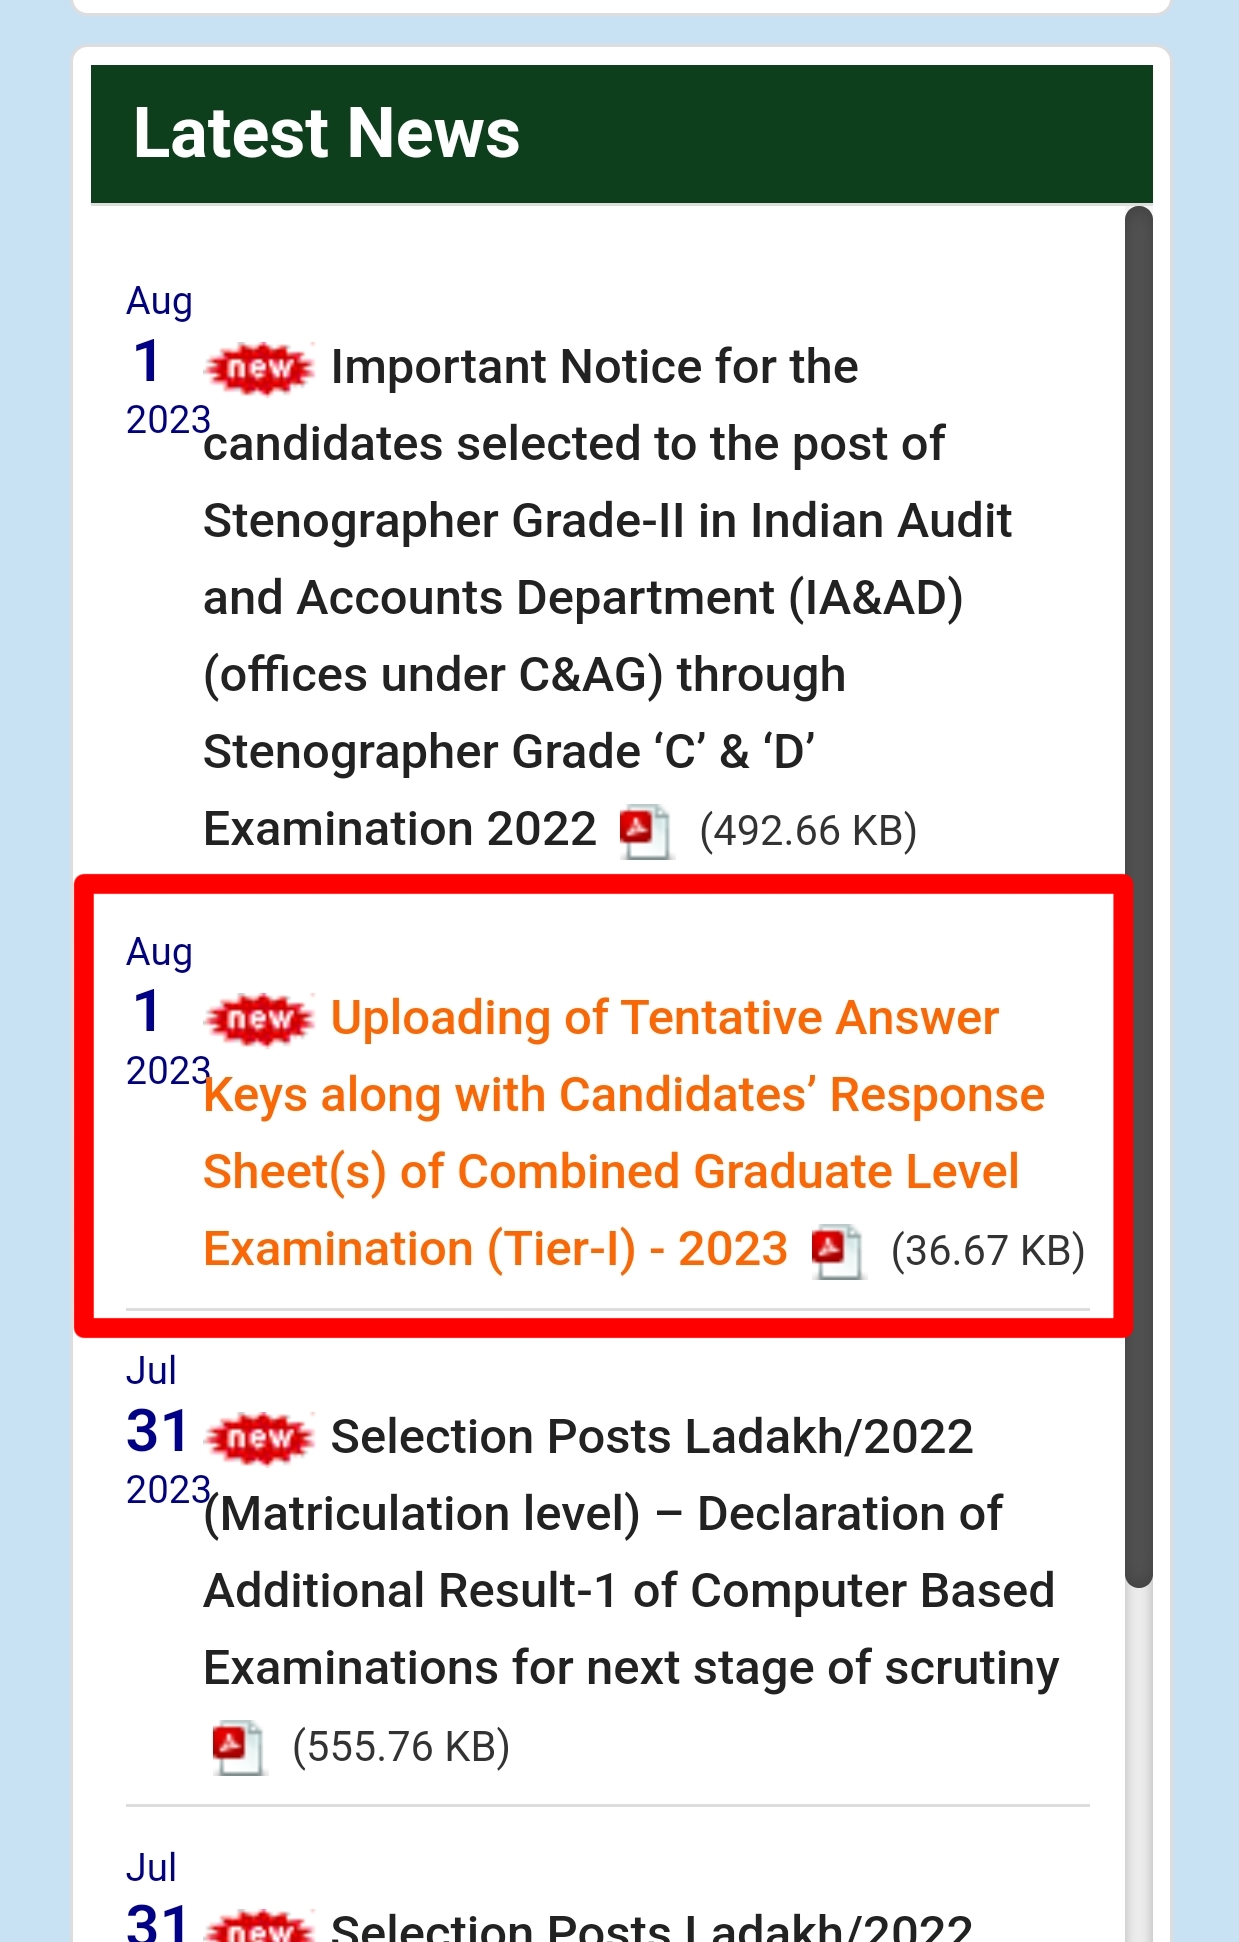 Uploading of Tentative Answer Keys along with Candidates’ Response Sheet(s) of Combined Graduate Level Examination (Tier-I) - 2023 